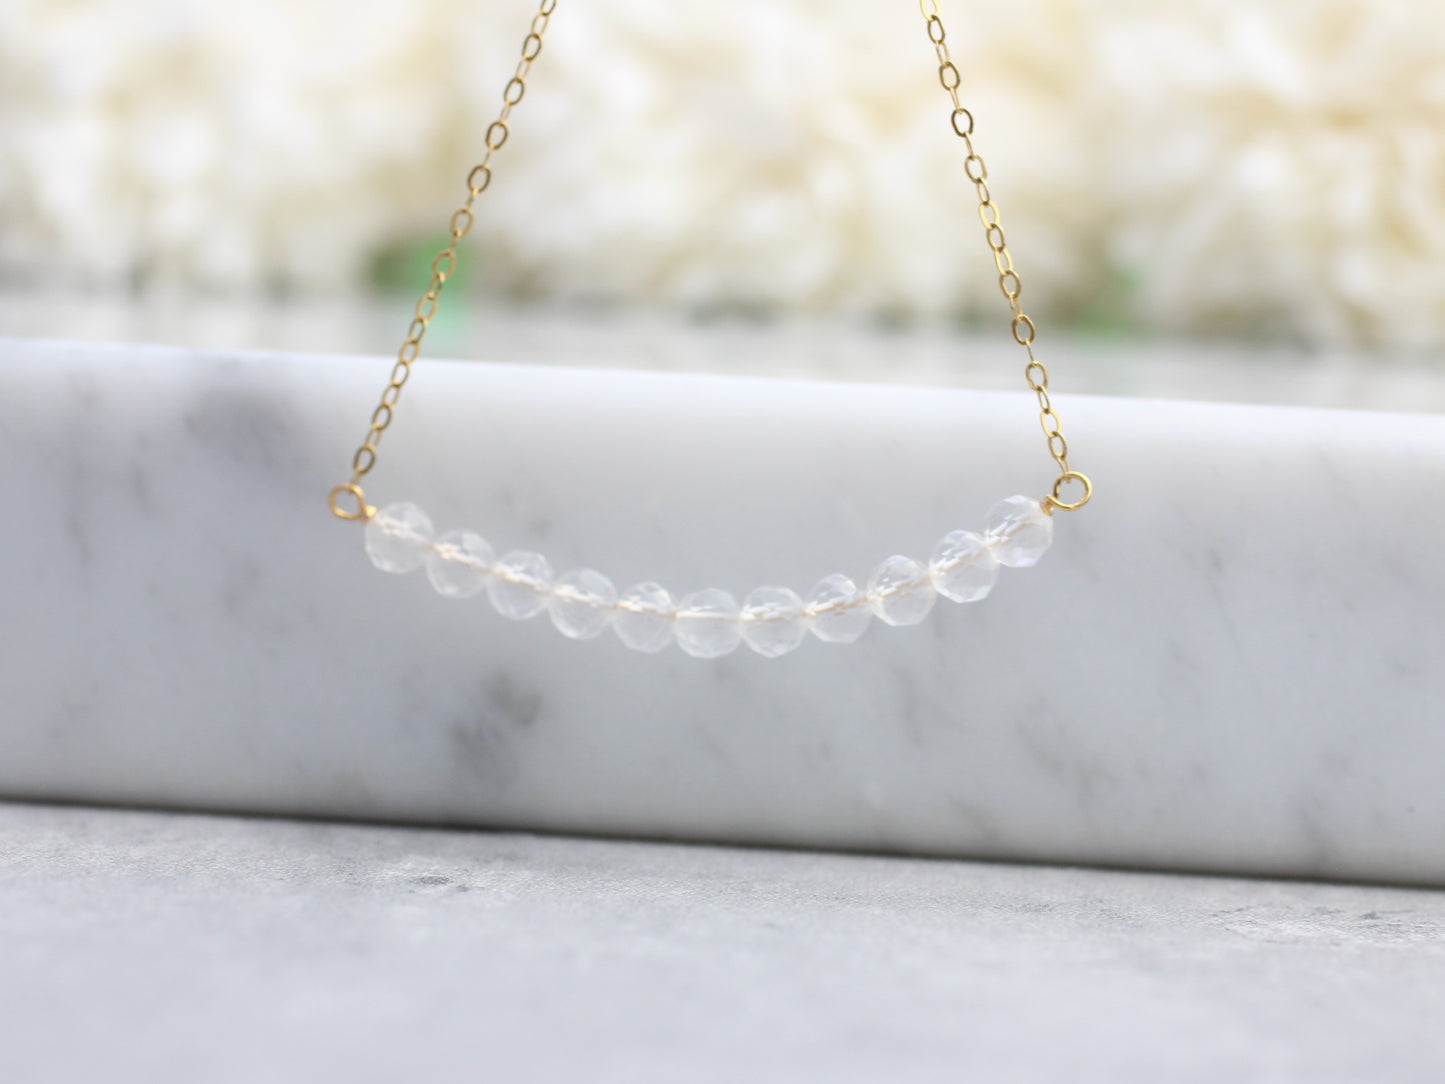 Quartz gemstone necklace in silver or gold.